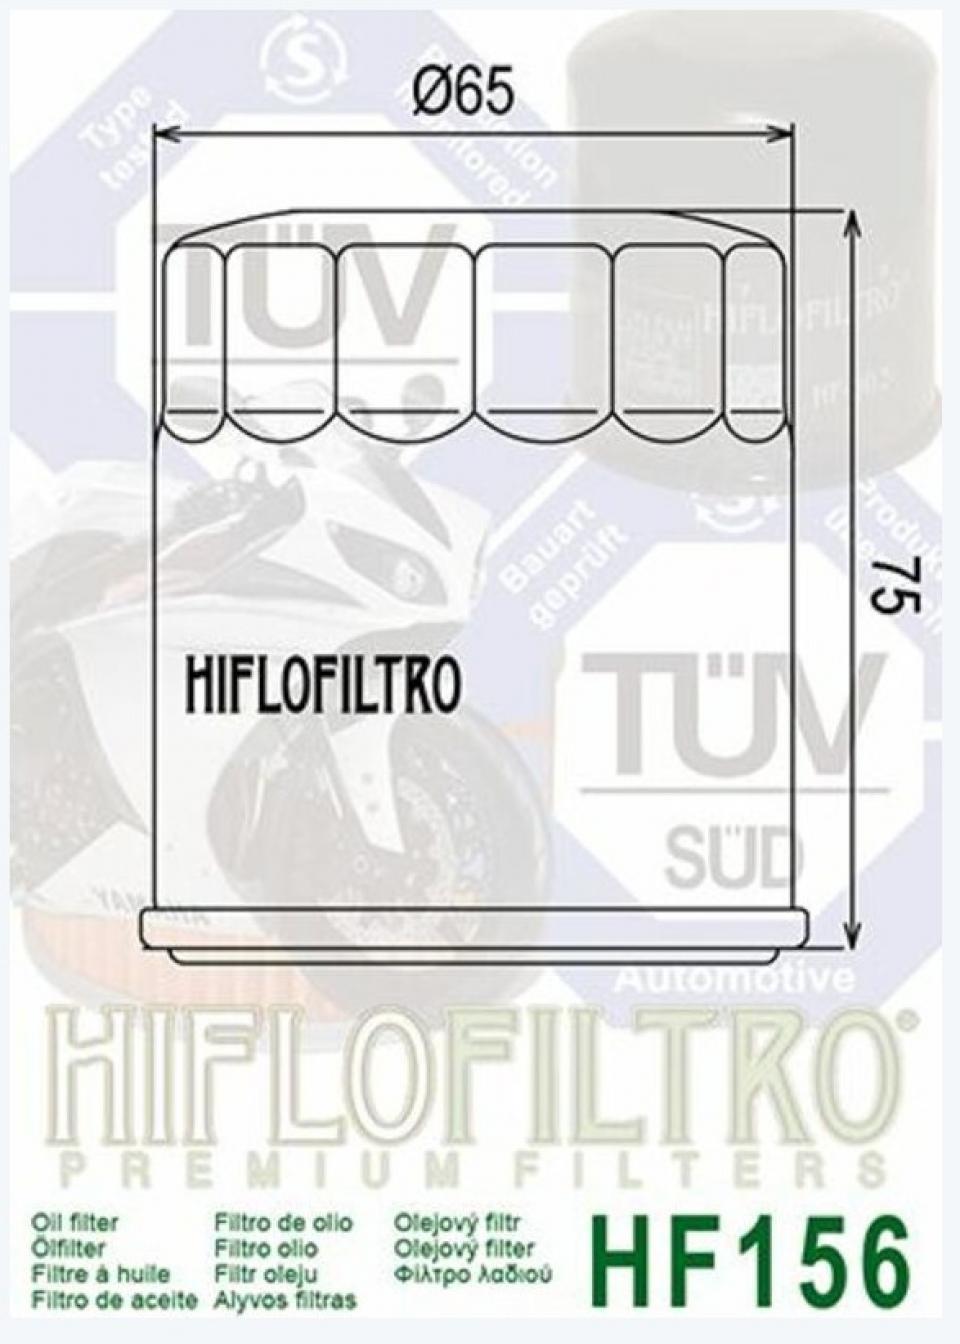 Filtre à huile Hiflo Filtro pour Moto KTM 620 Egs E 1995-1998 Neuf